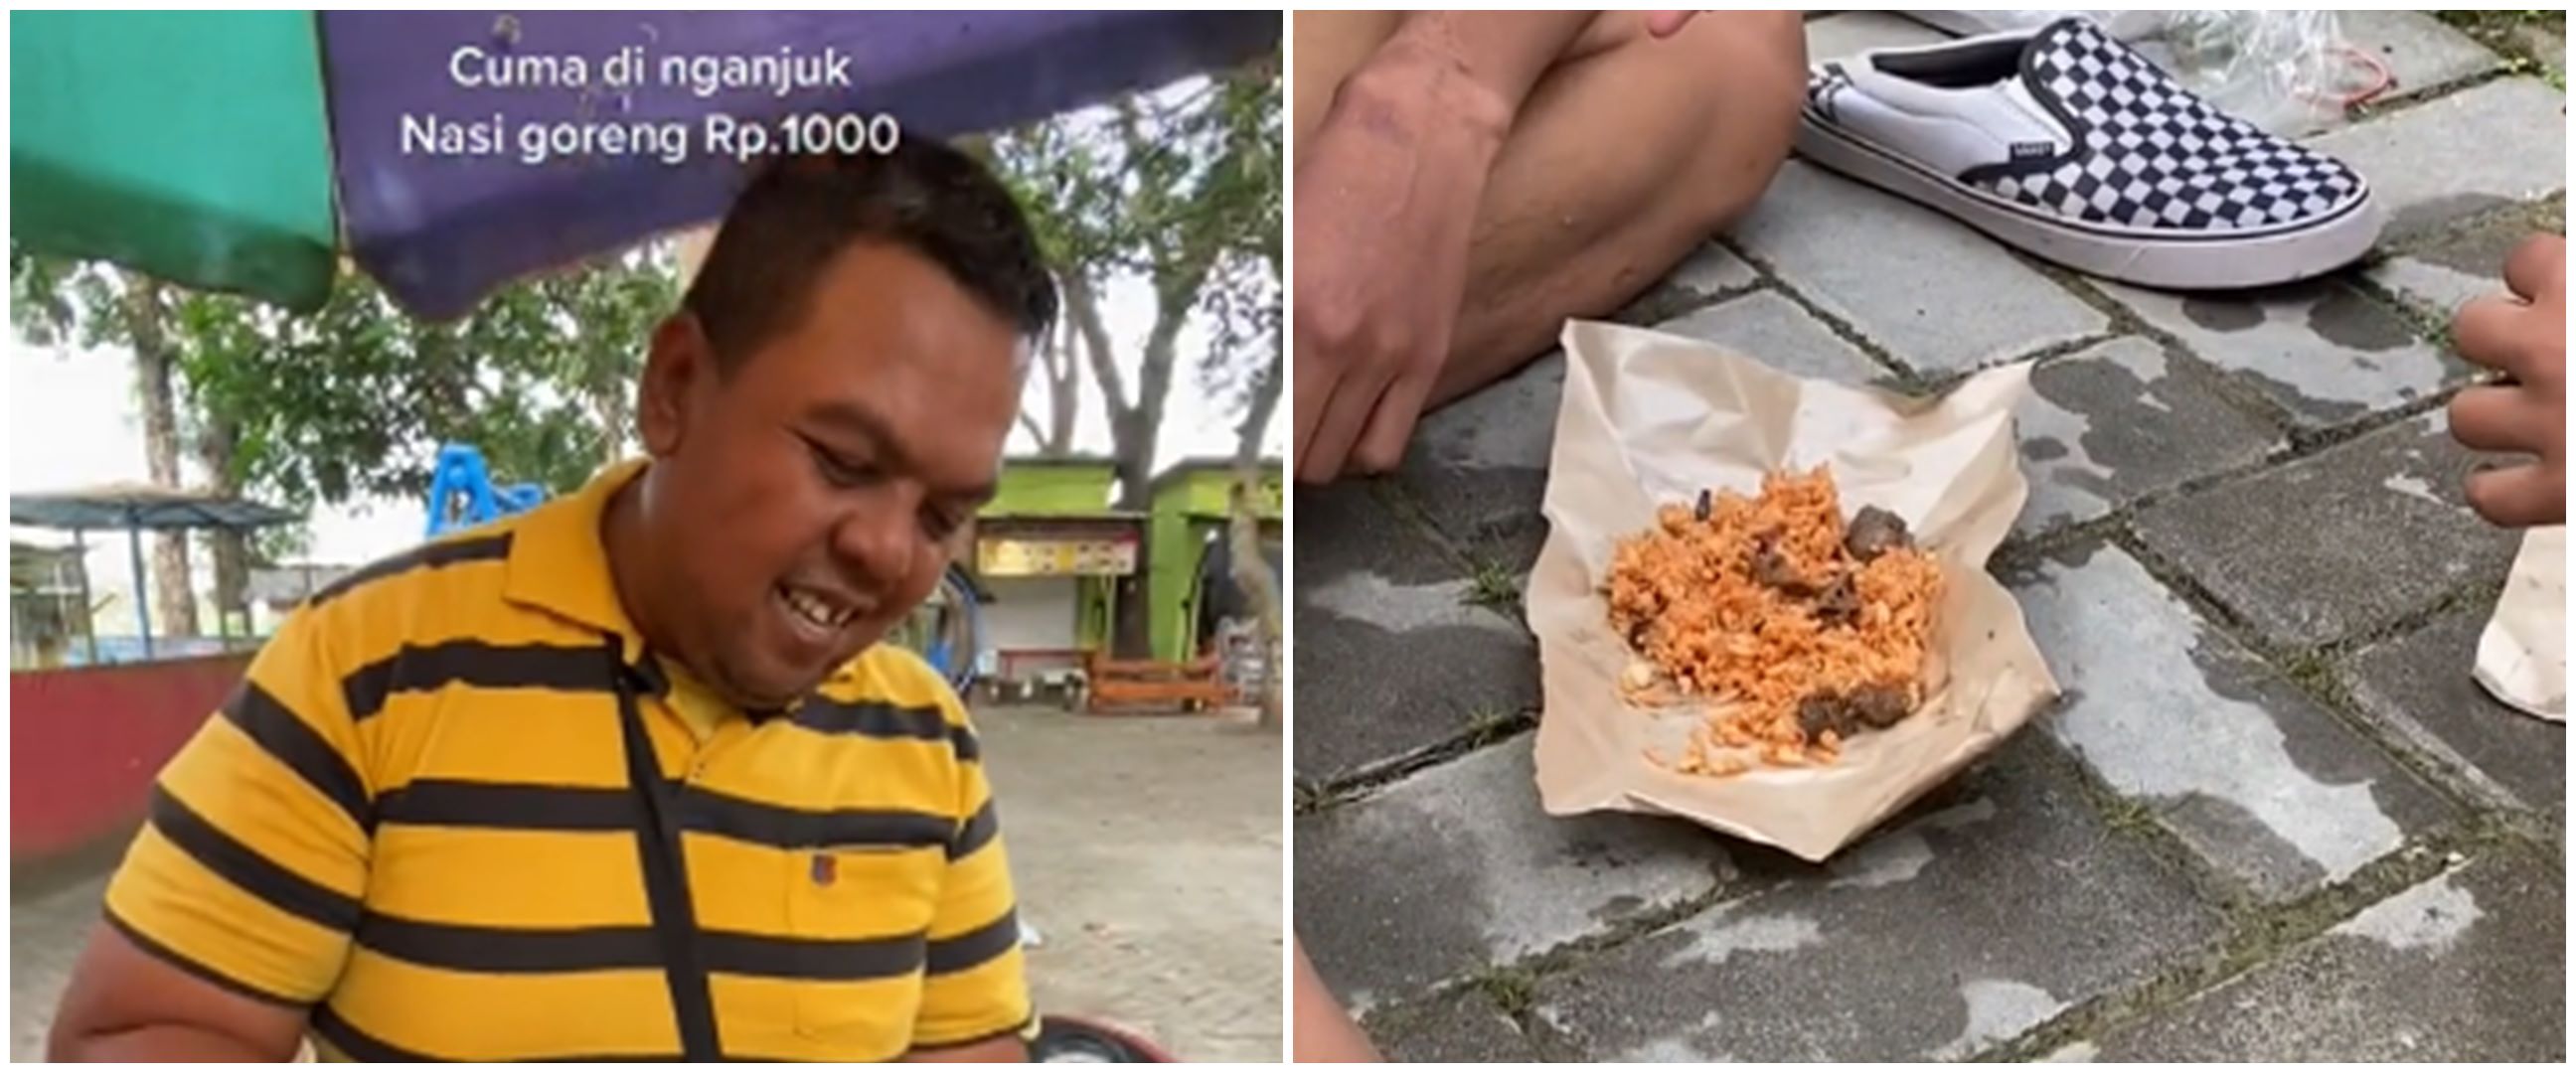 Bikin terkejut, nasi goreng di Nganjuk harganya cuma Rp 1000